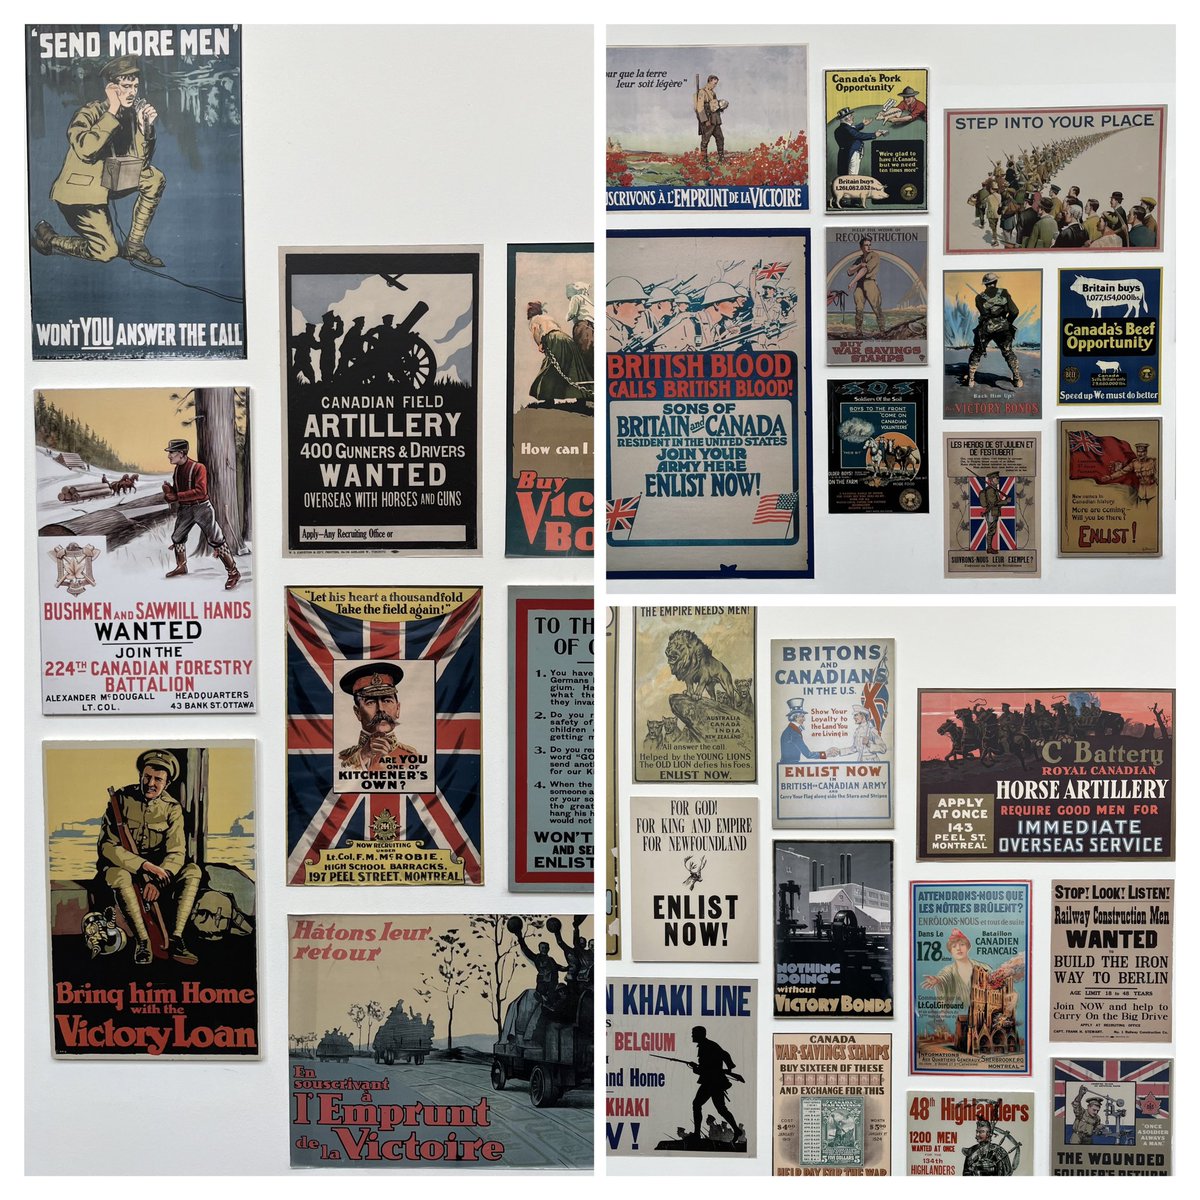 Gezien in #Vimy Park Education Centre: Canadese Eerste Wereldoorlog propagandaposters #VimyRidge
@vimyfoundation @GreatWarCentre #WW1 #WeWillRemenber